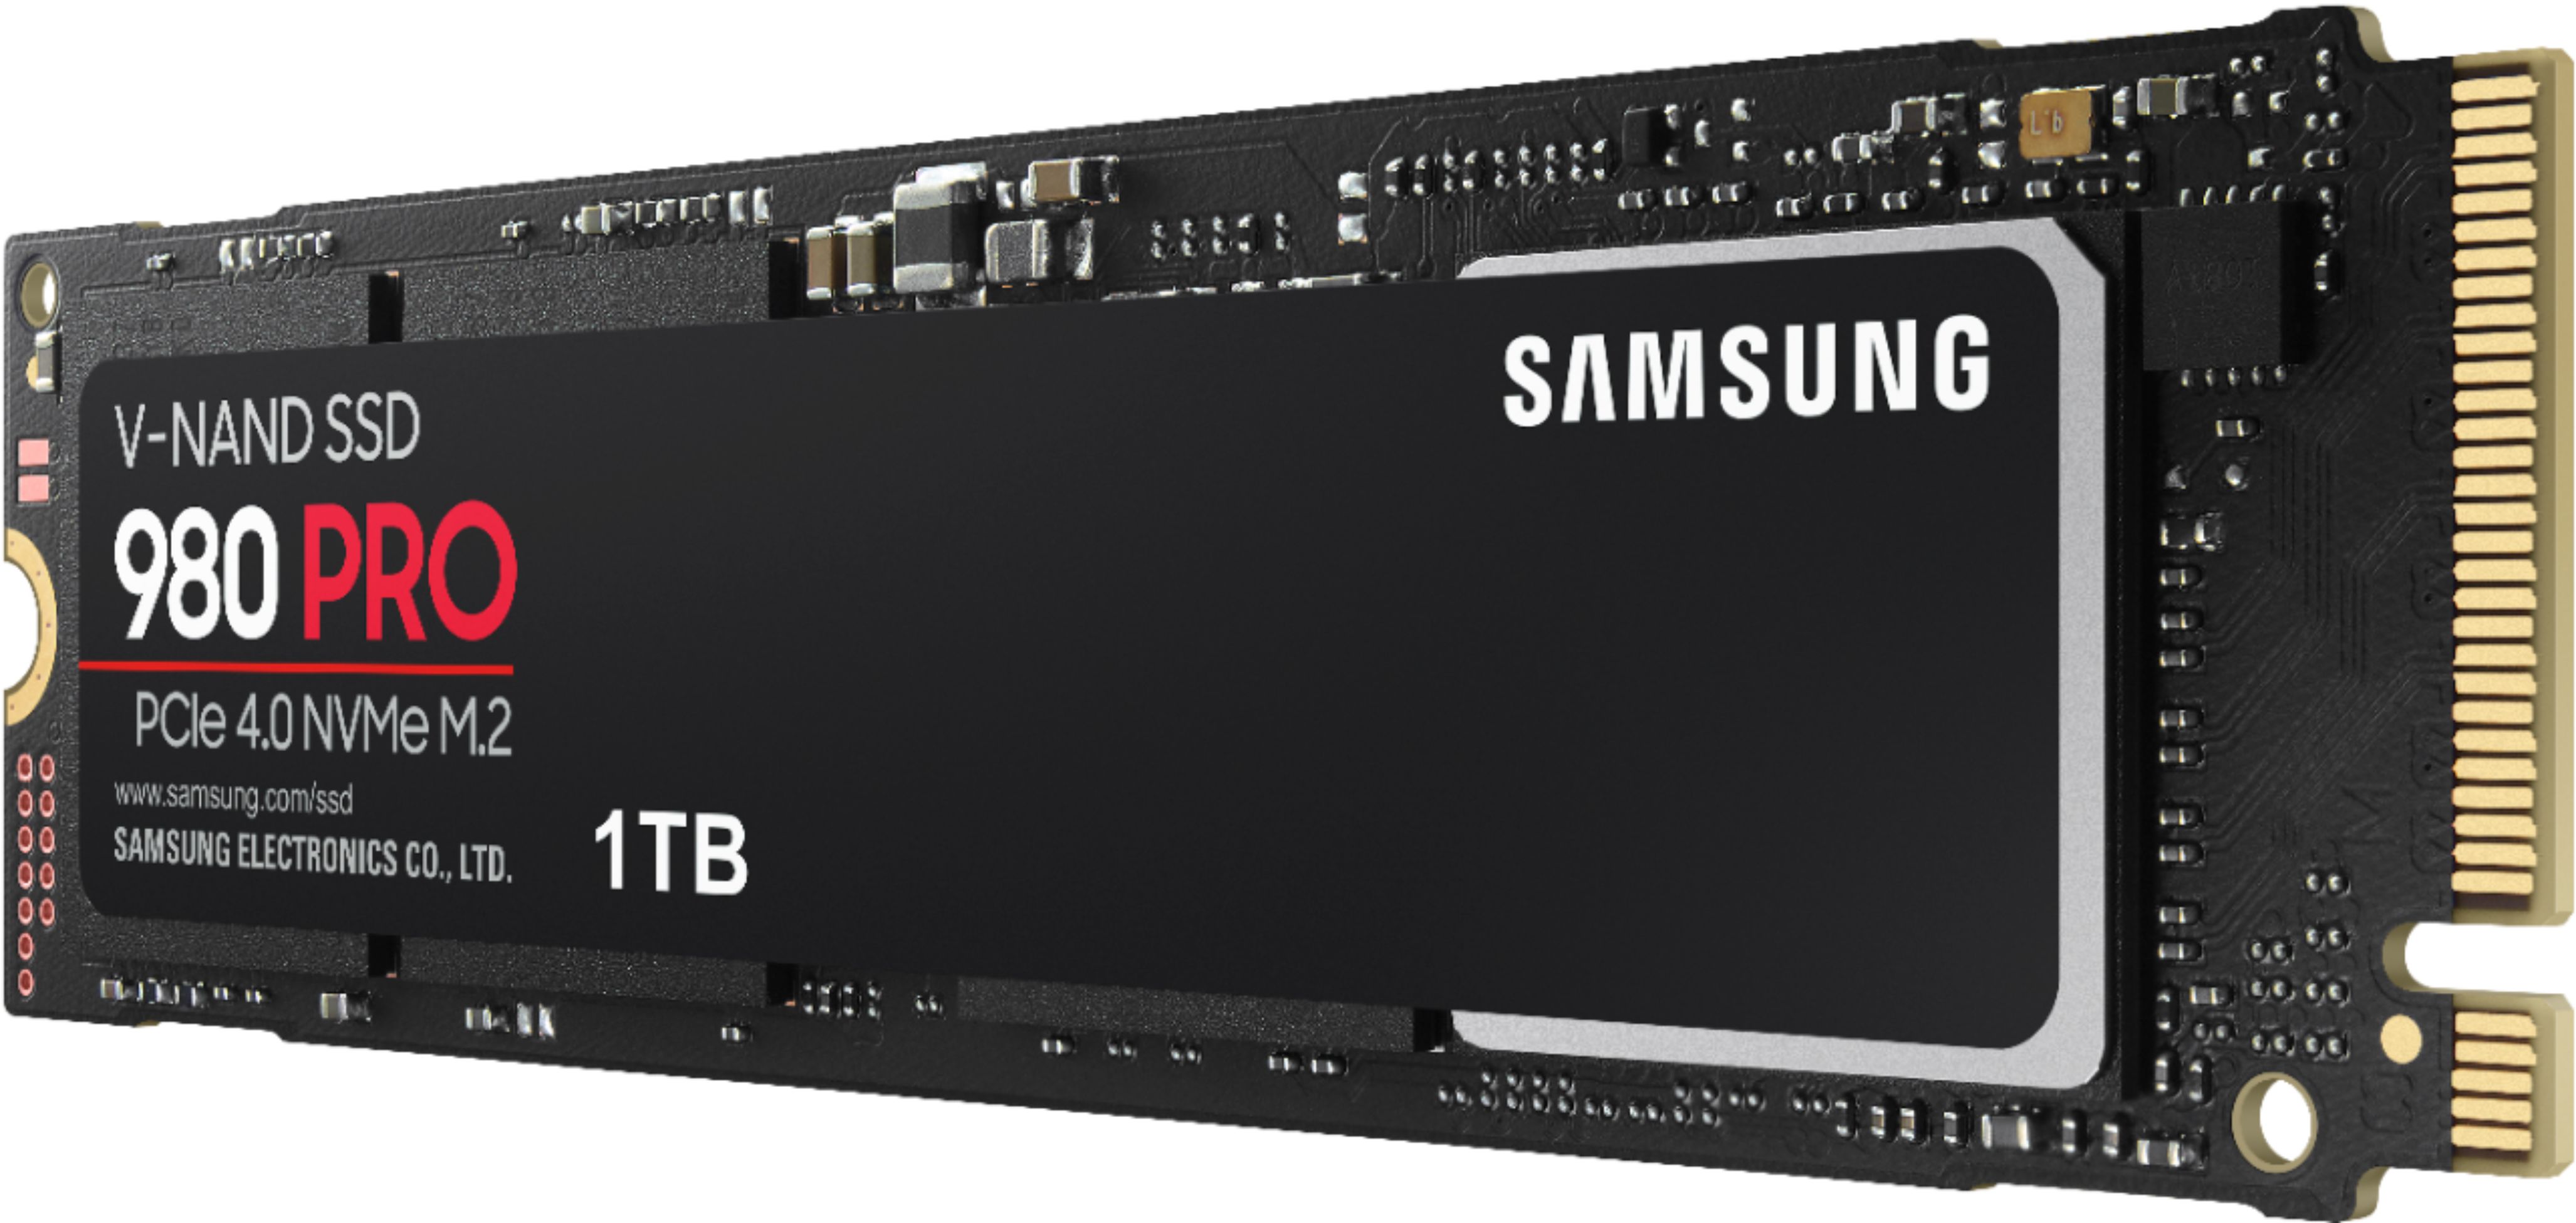 Samsung 980 PRO 1 TB Specs